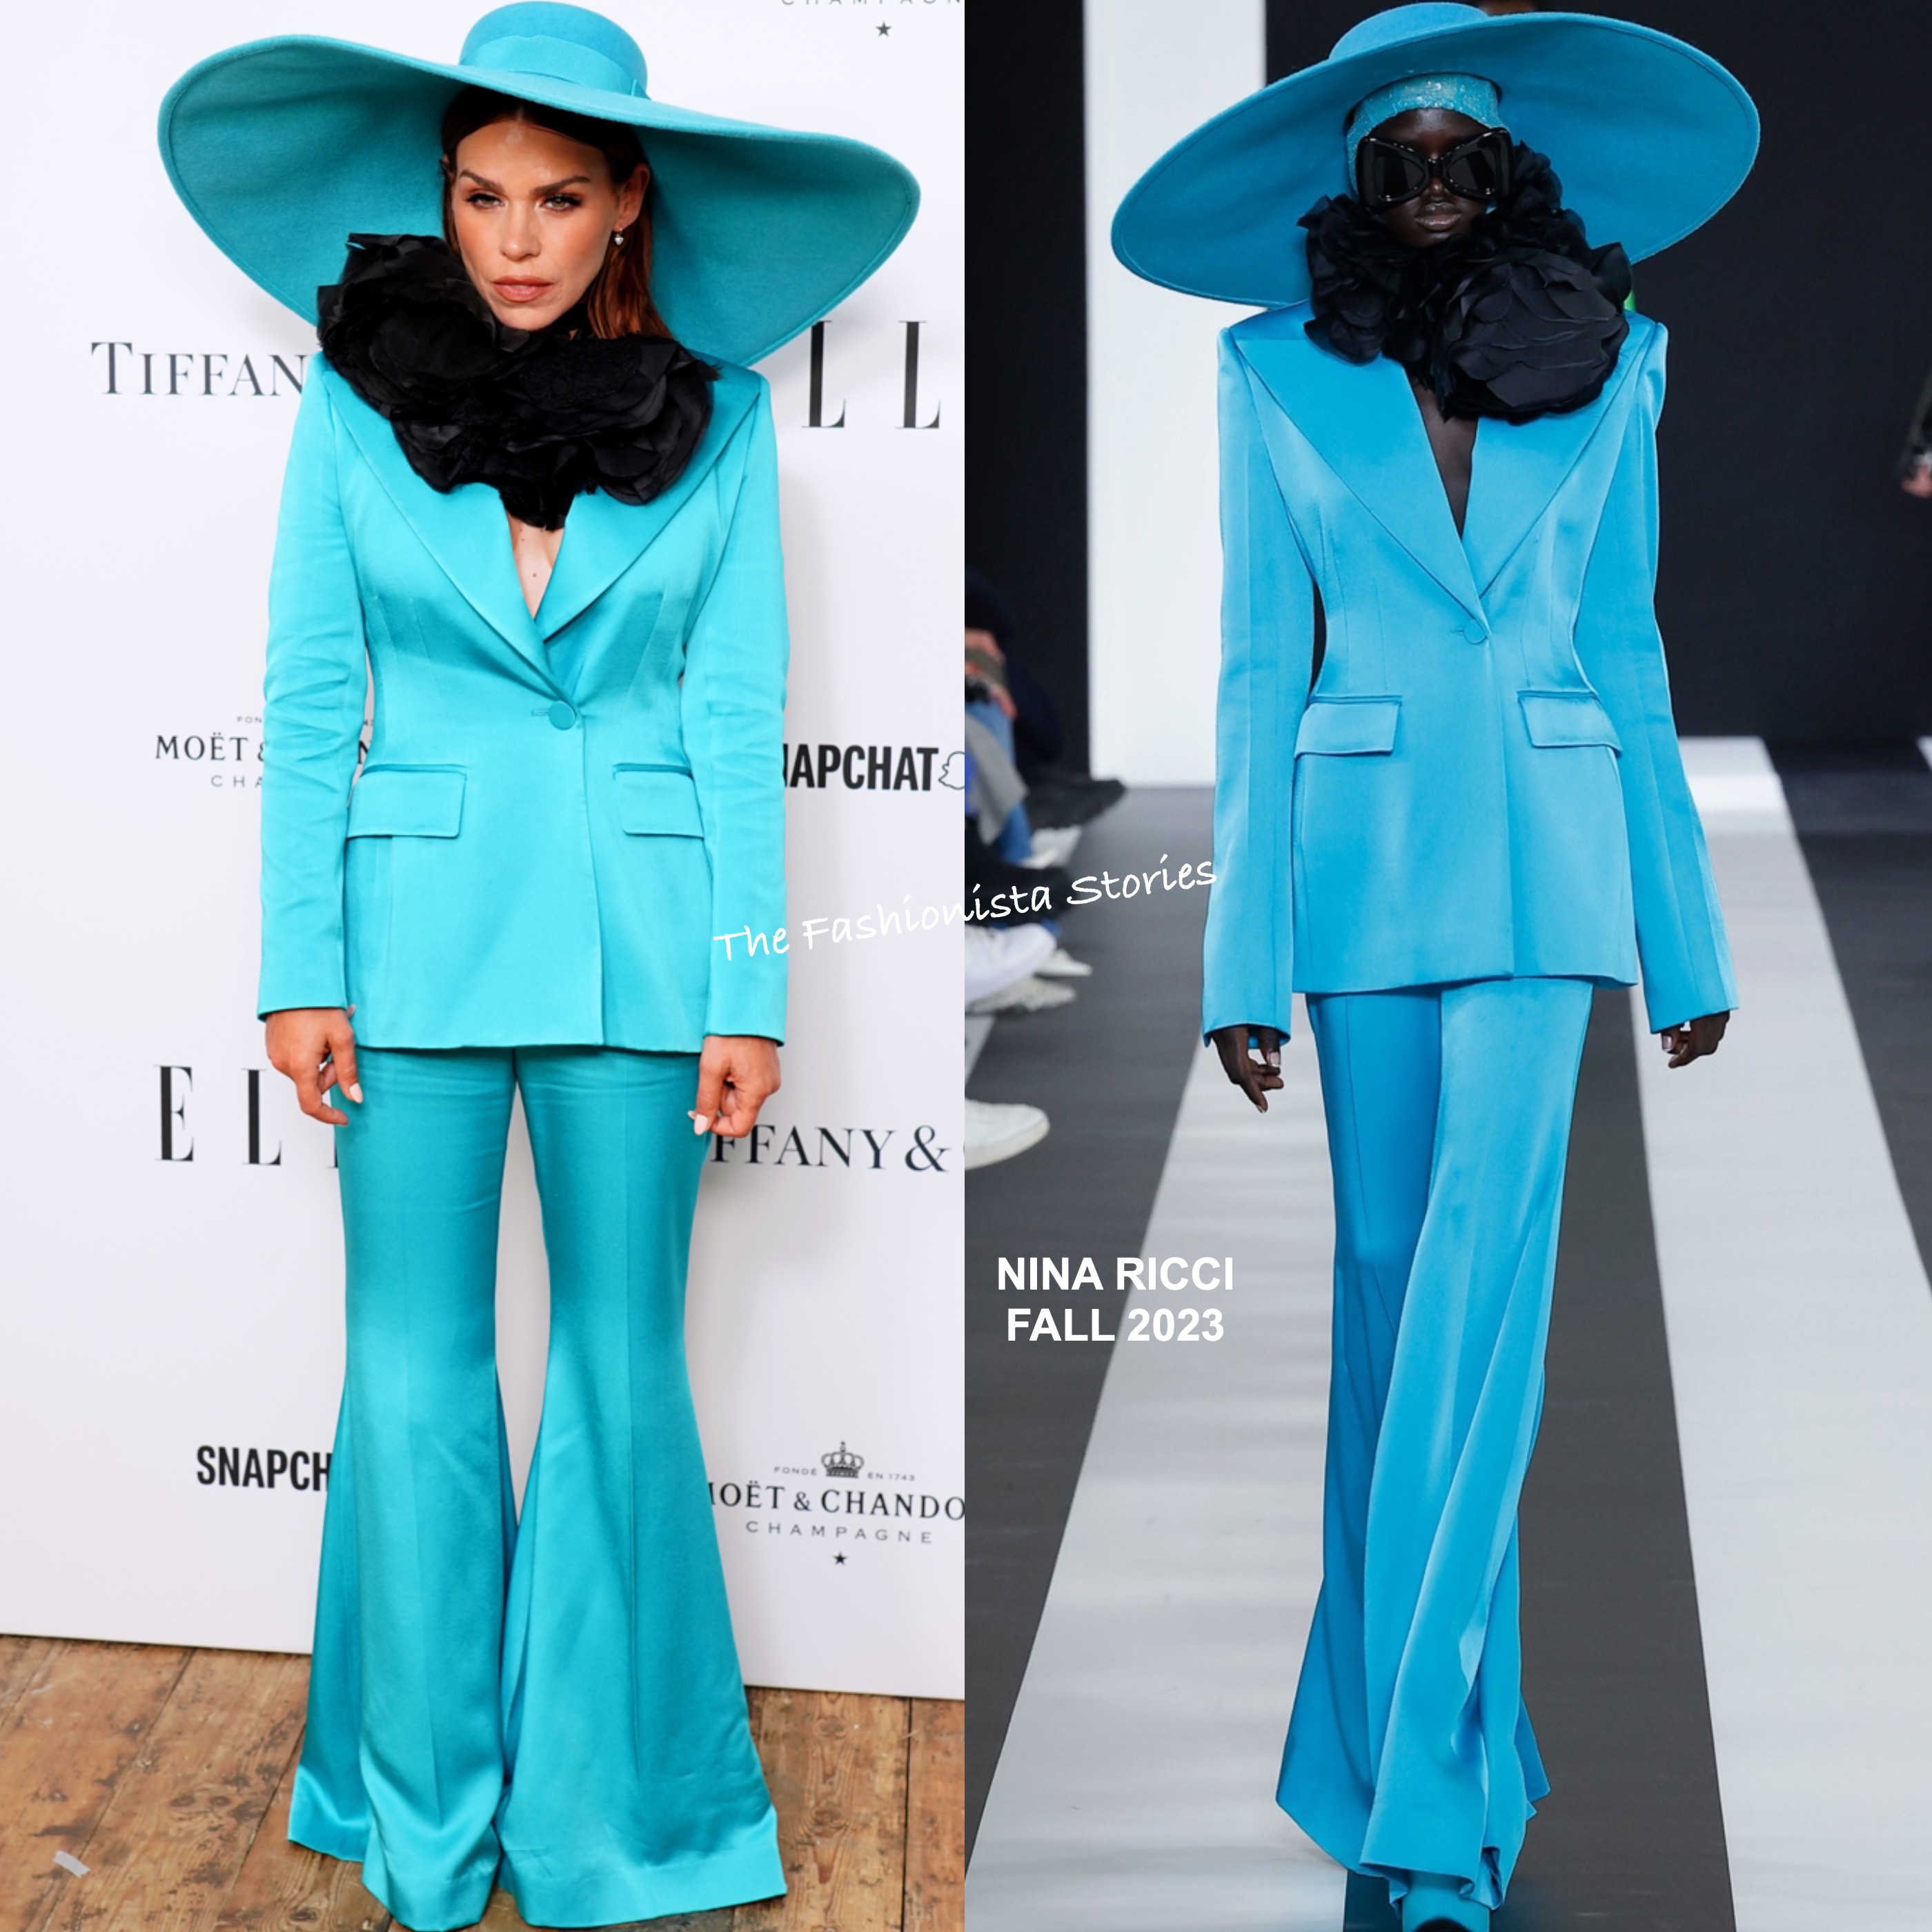 Gemma-Chan-ELLE-Style-Awards-2023-Red-Carpet-Fashion-Louis-Vuitton